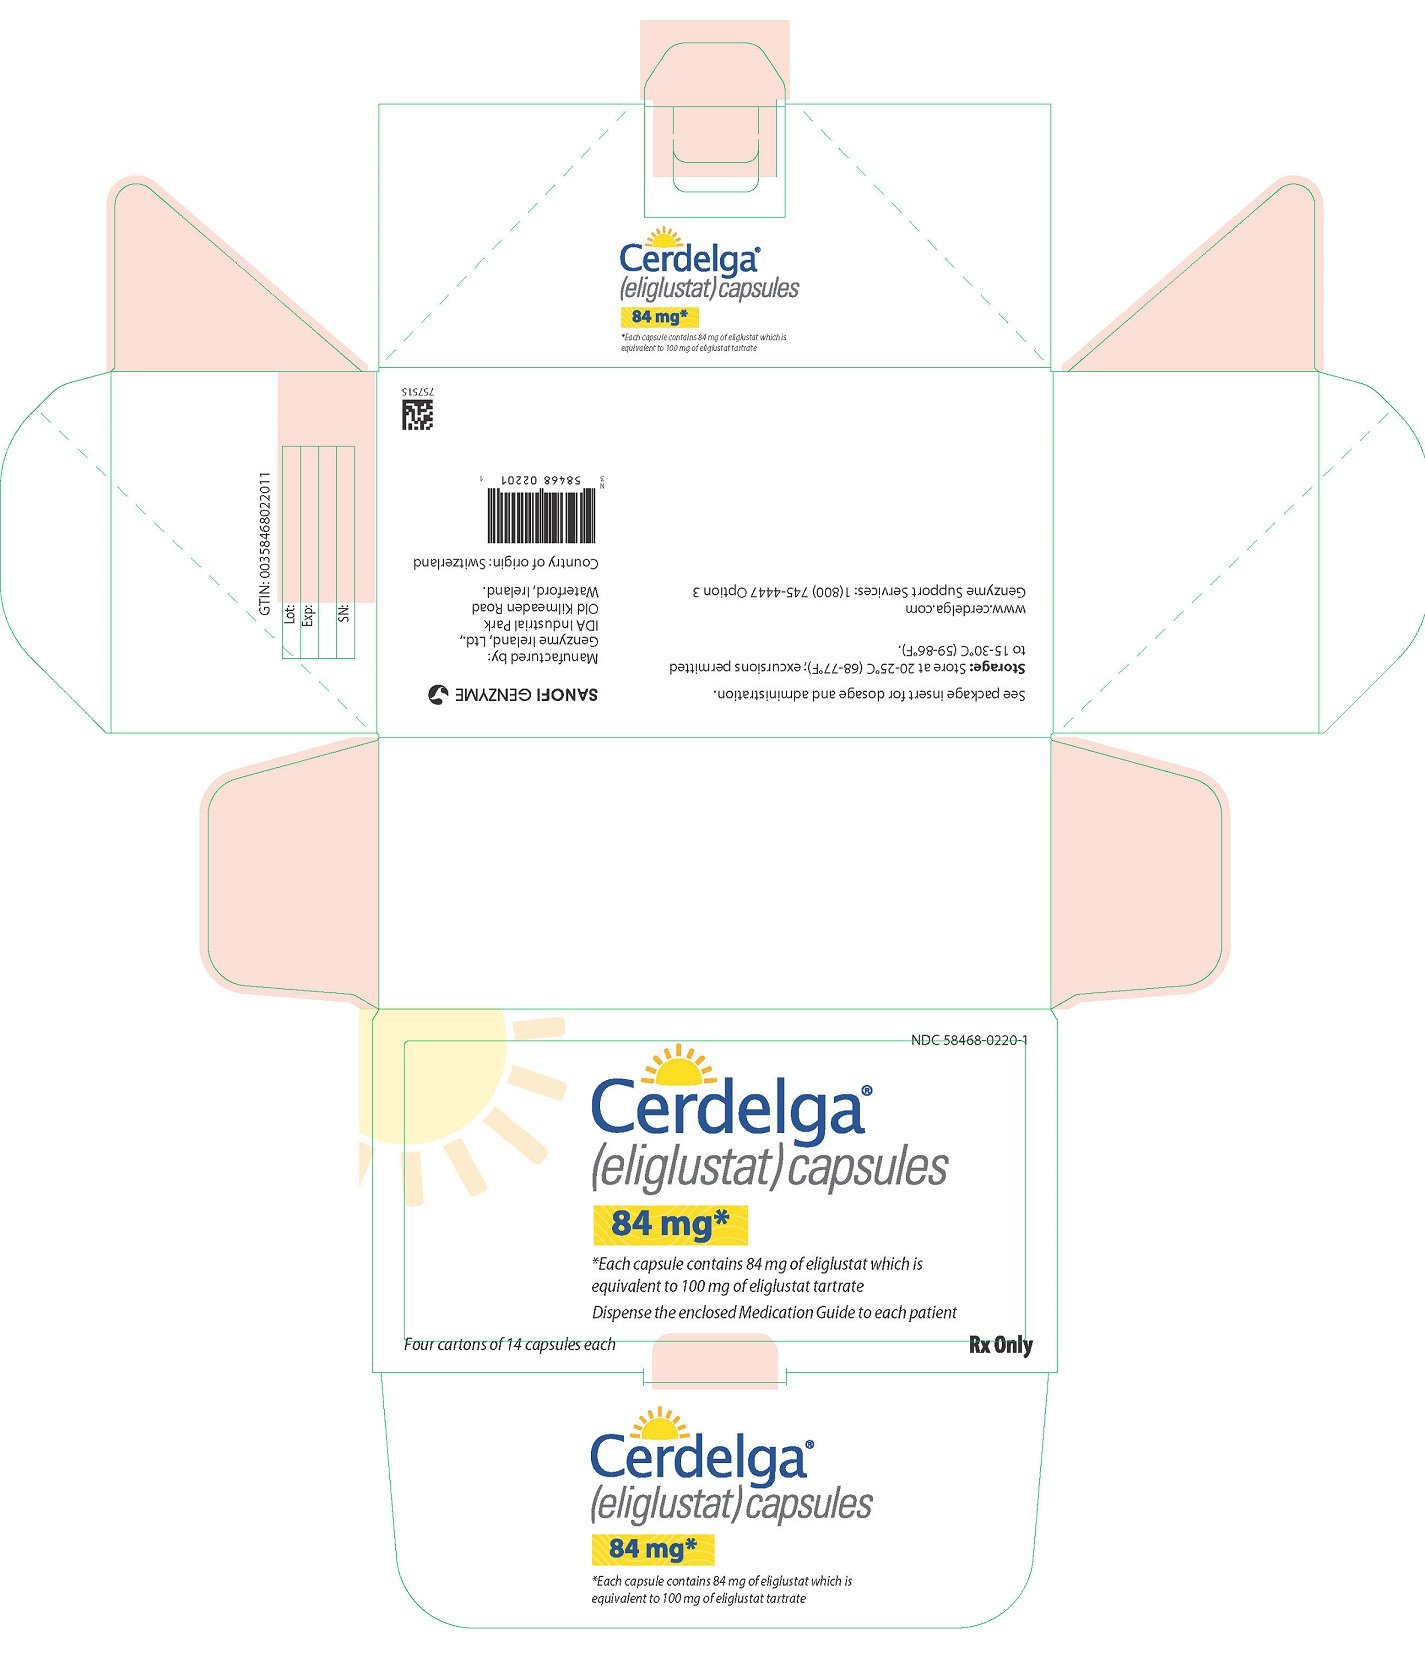 PRINCIPAL DISPLAY PANEL - 4 Blister Pack Carton